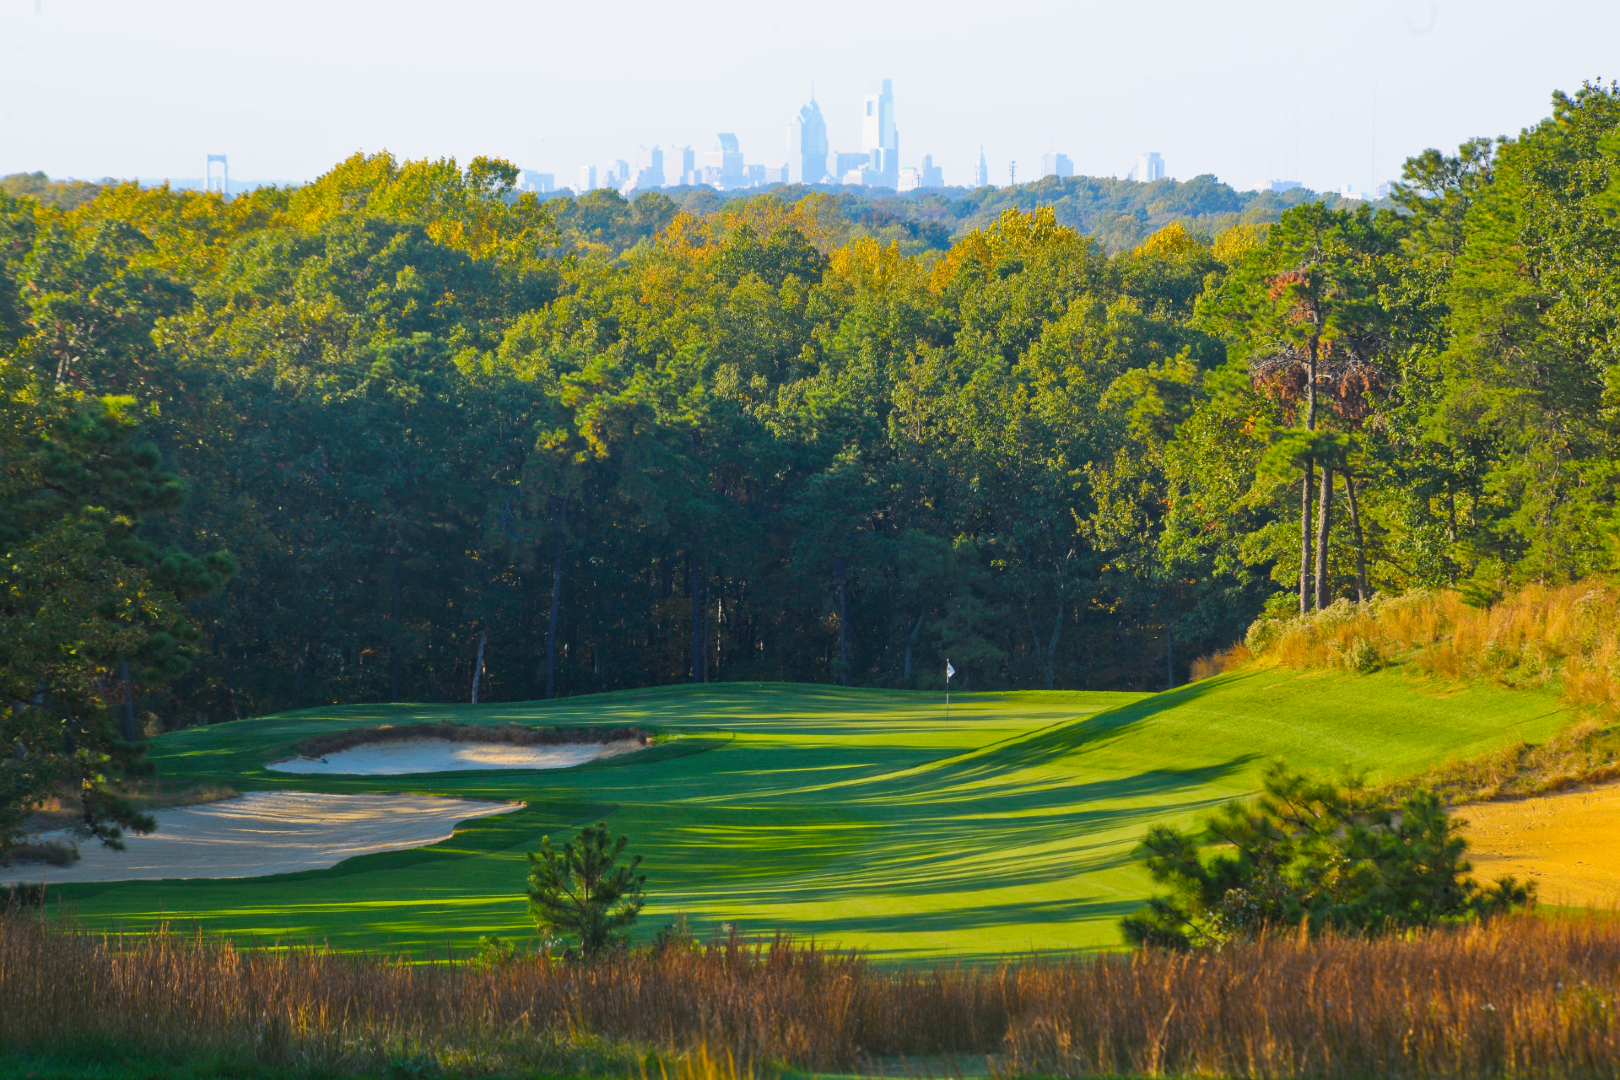 Trump Golf's Ultimate Course: Hole No. 7